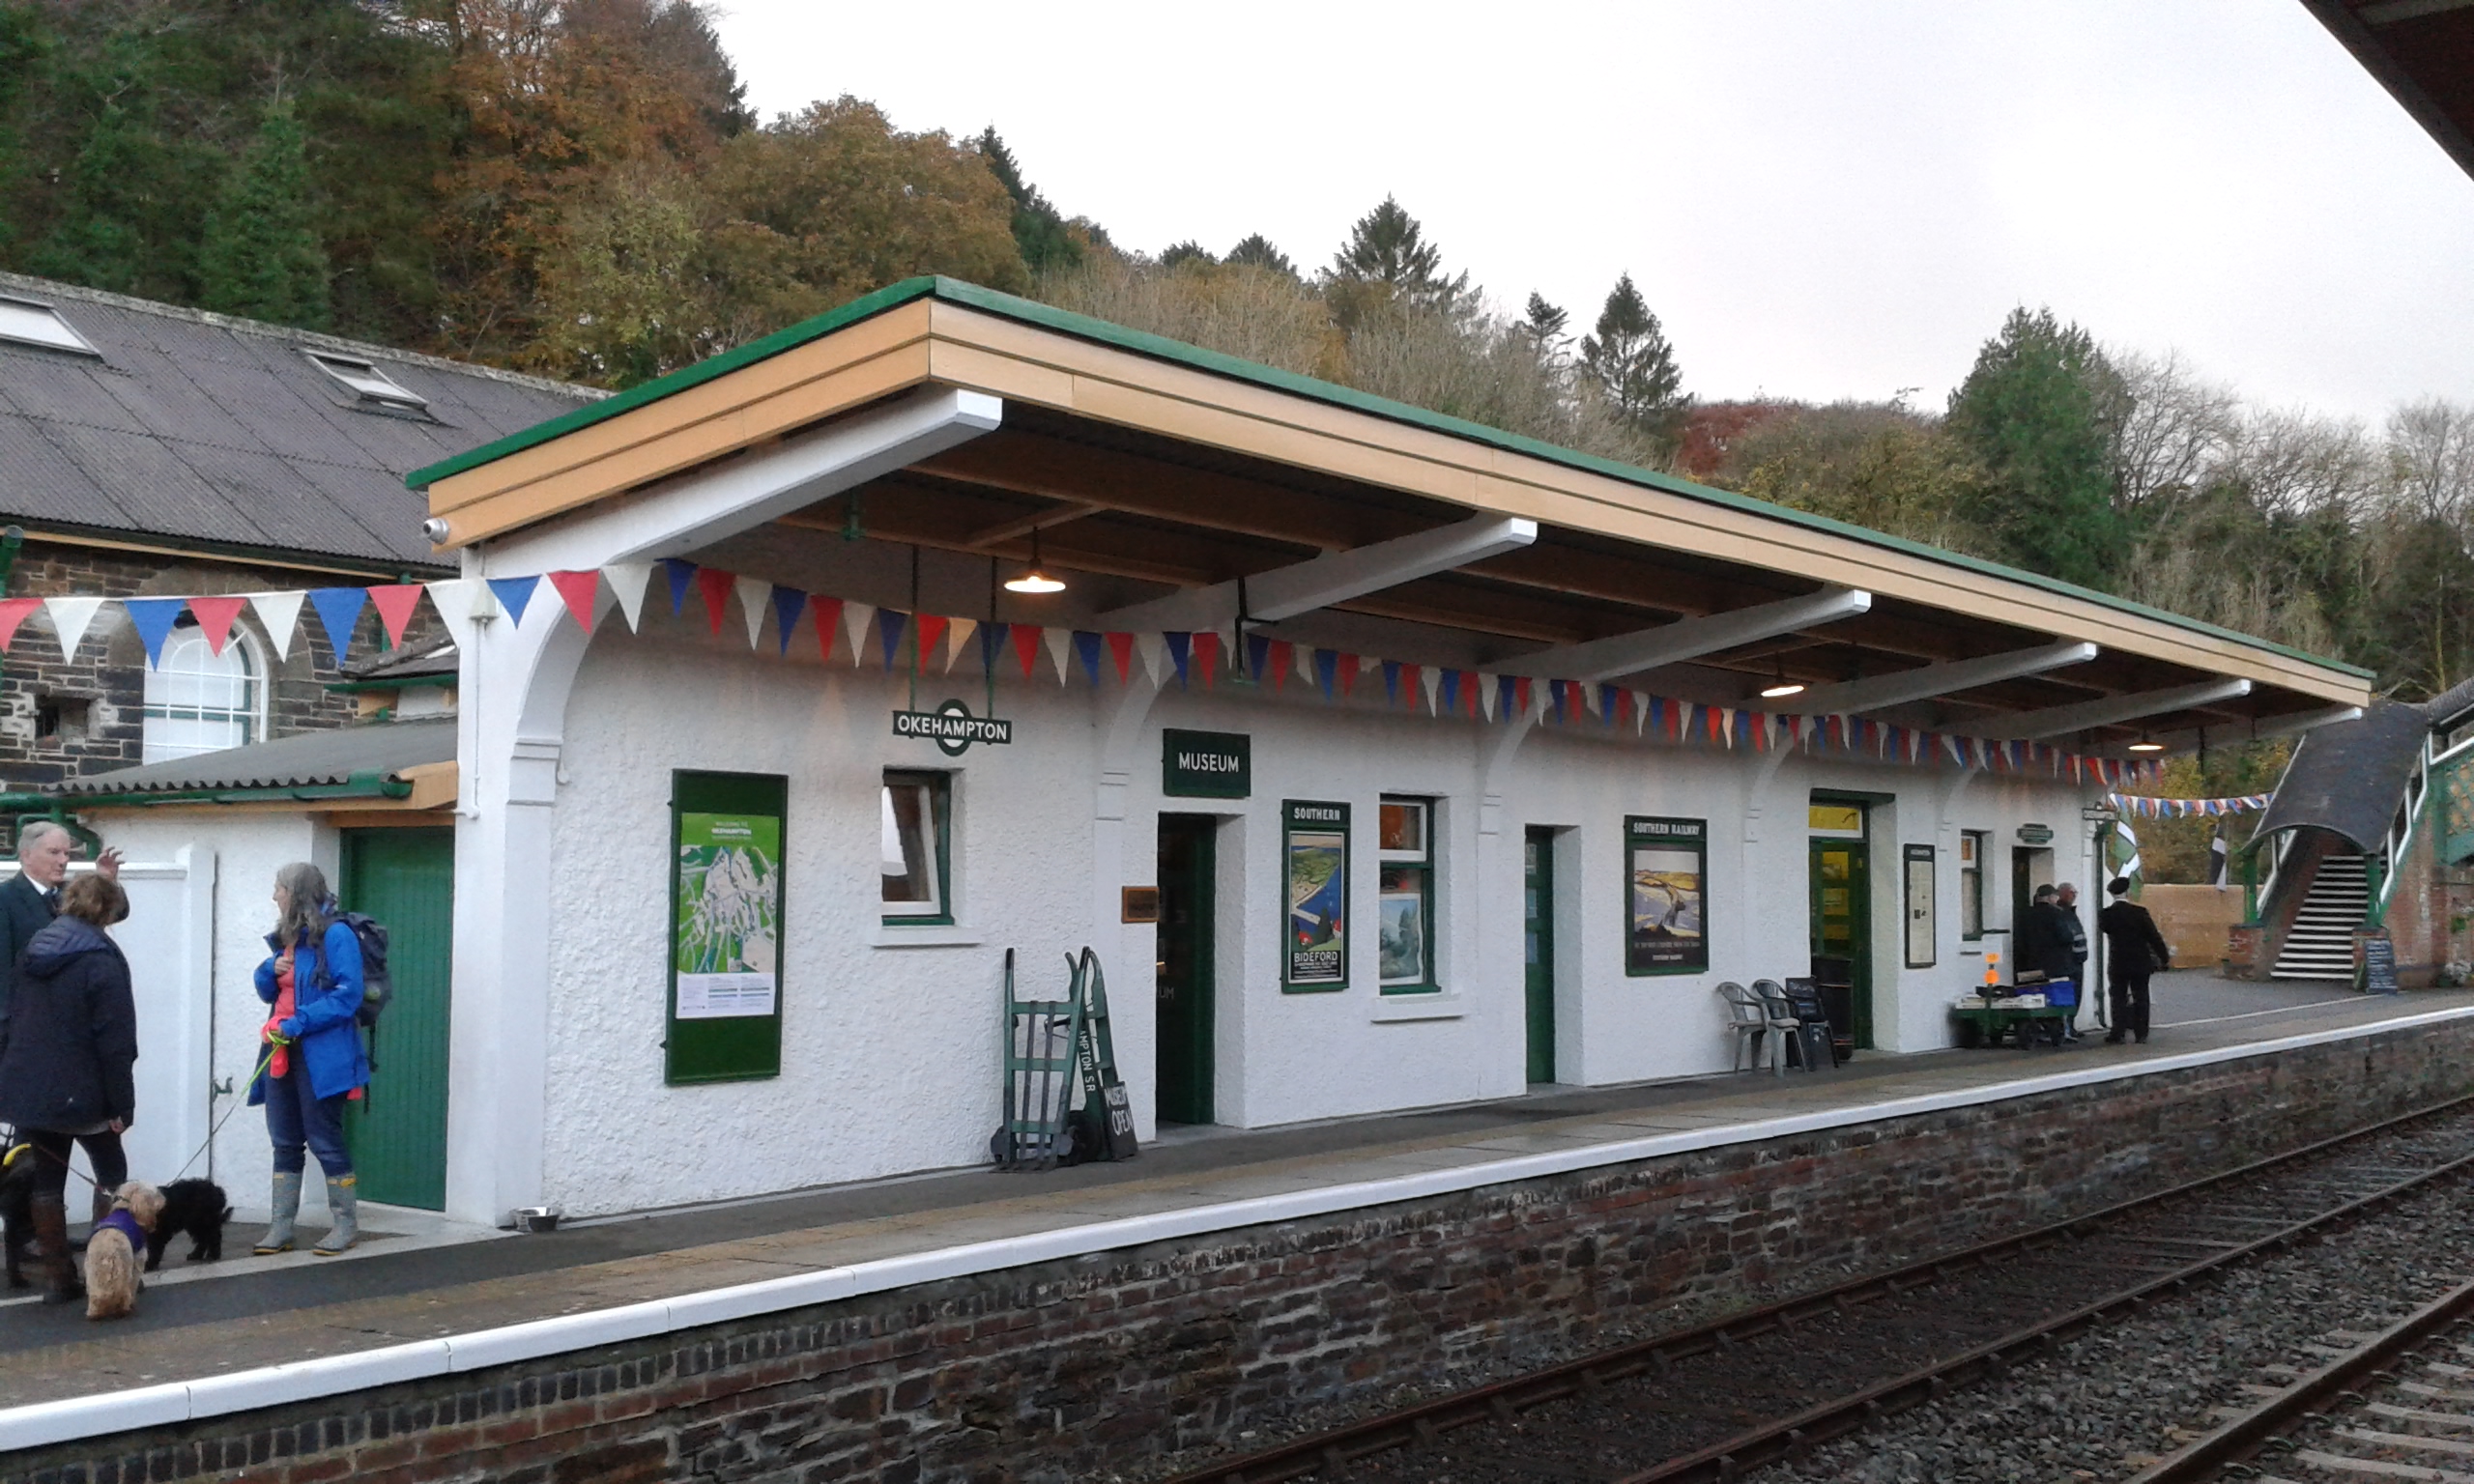 Okehampton Platform 2 and building used by the Dartmoor Railway Association